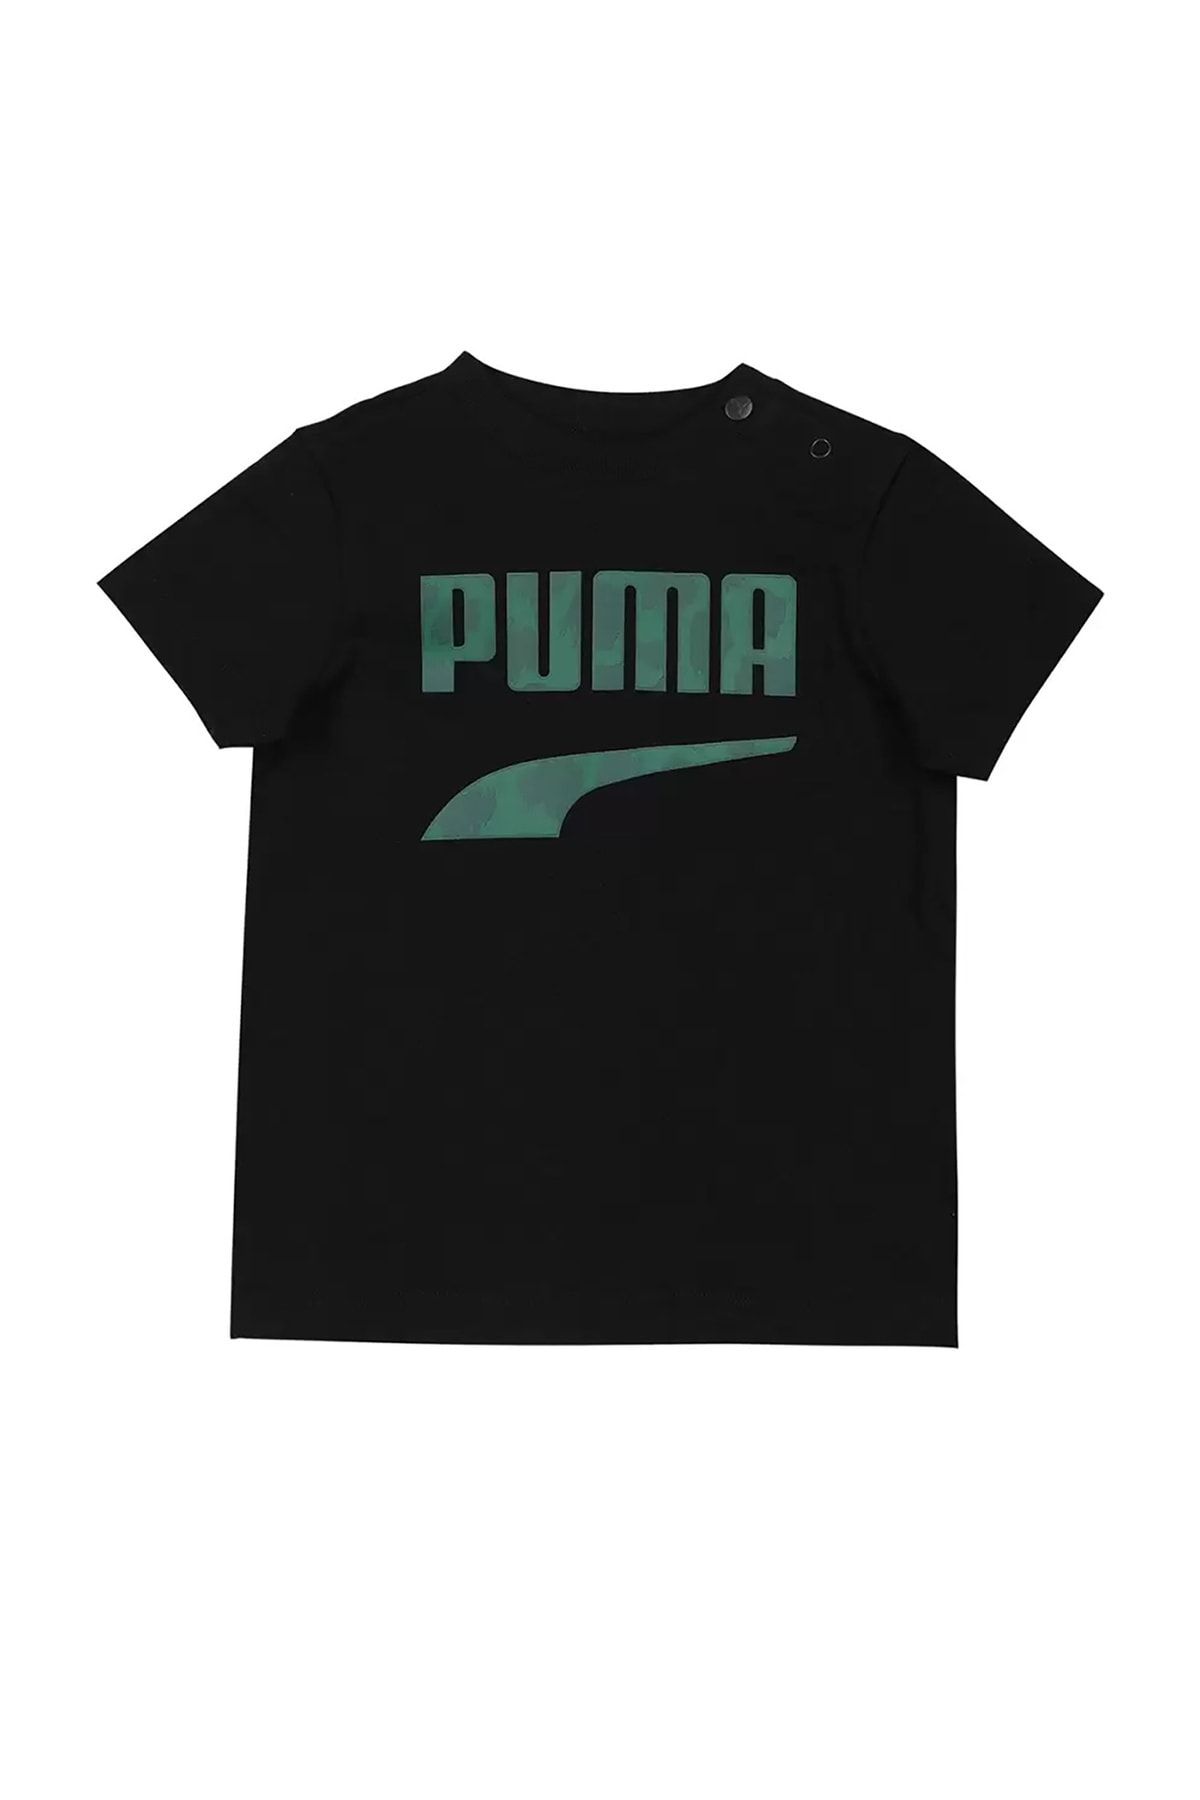 Puma Siyah Bebek T-shirt 53848301 Mınıcats Downtown